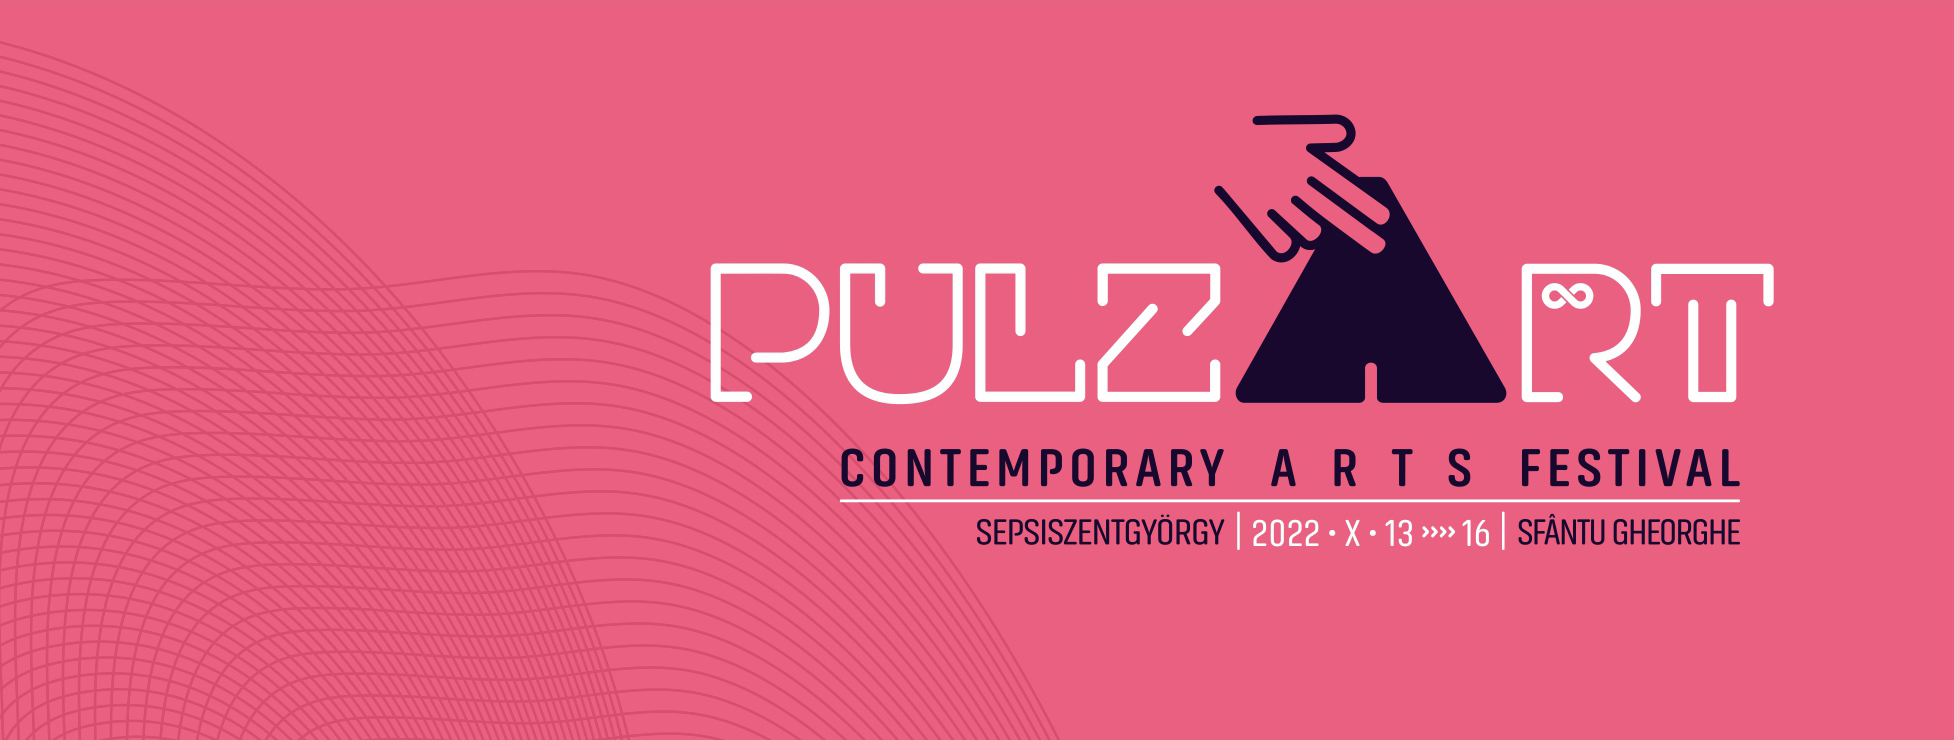 PulzArt - Festival de arte contemporane